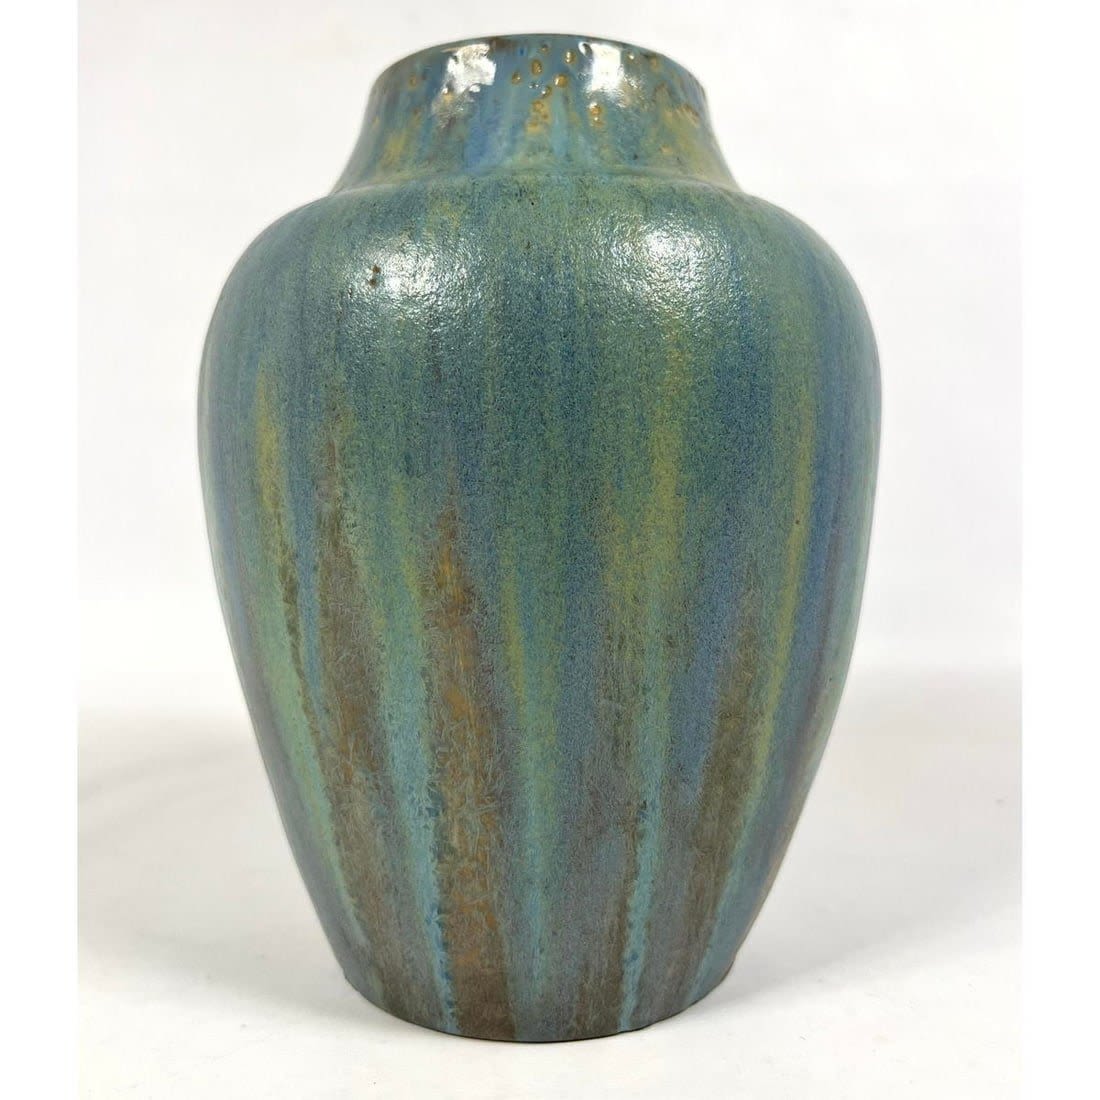 Pierrefonds Pottery vase with crystalline